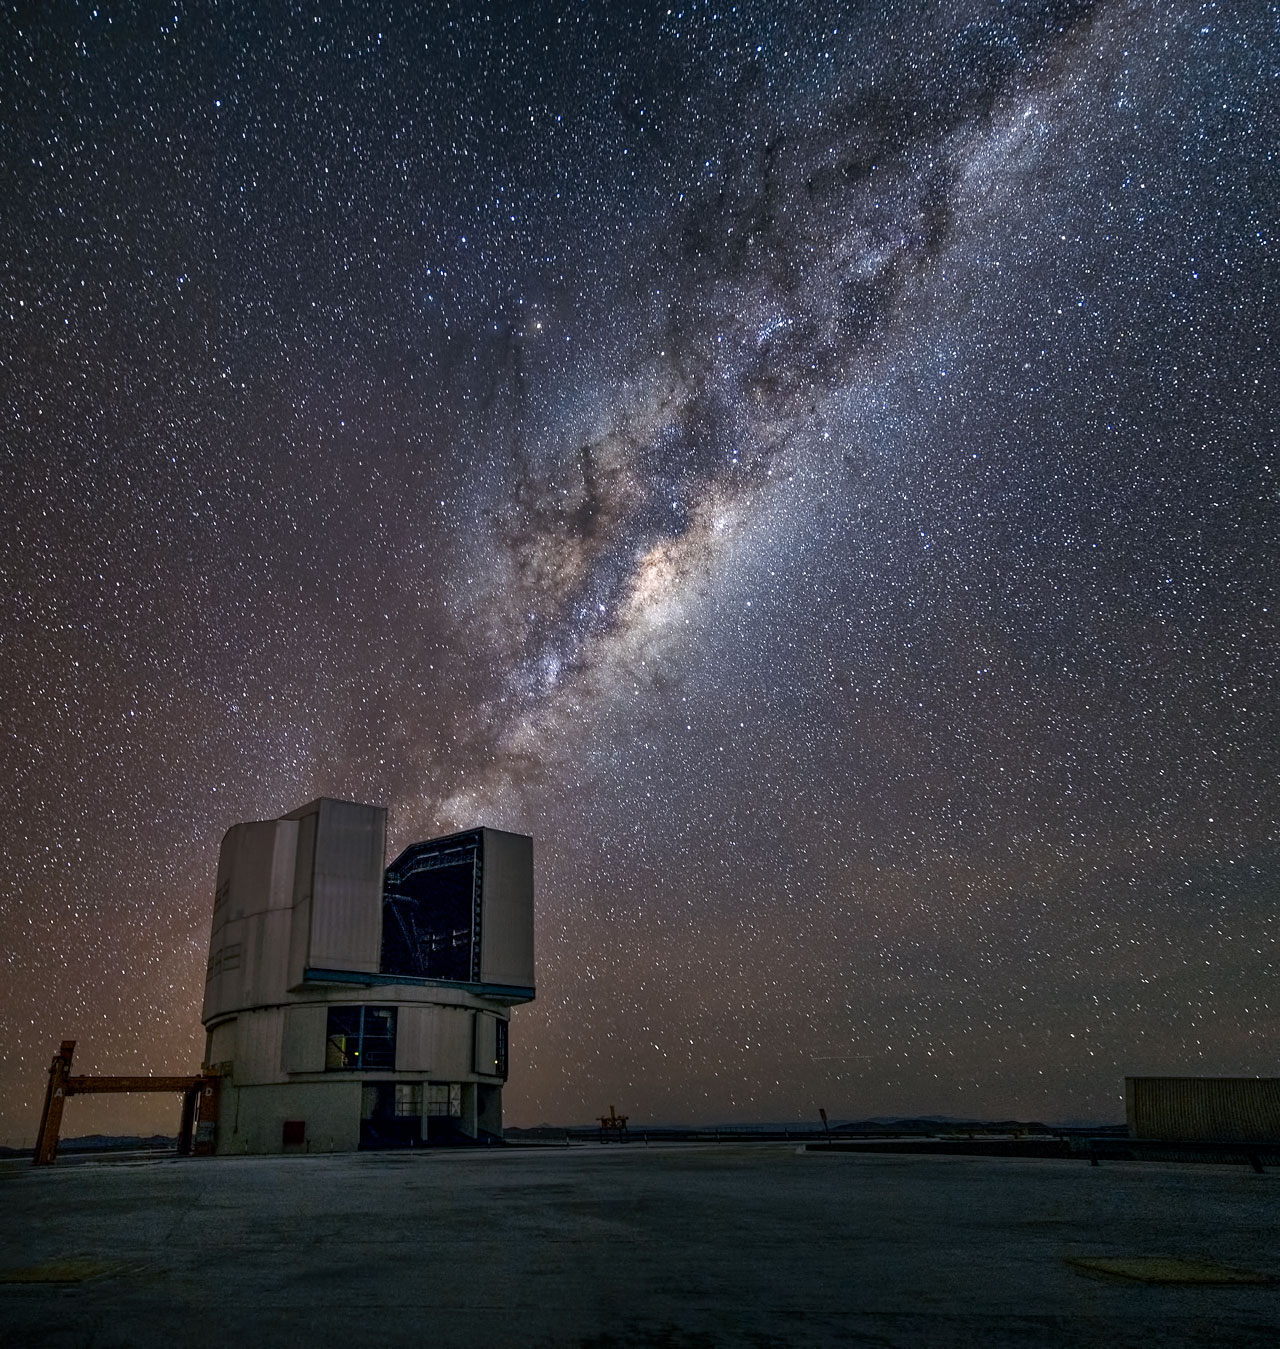 Yepun and the Milky Way